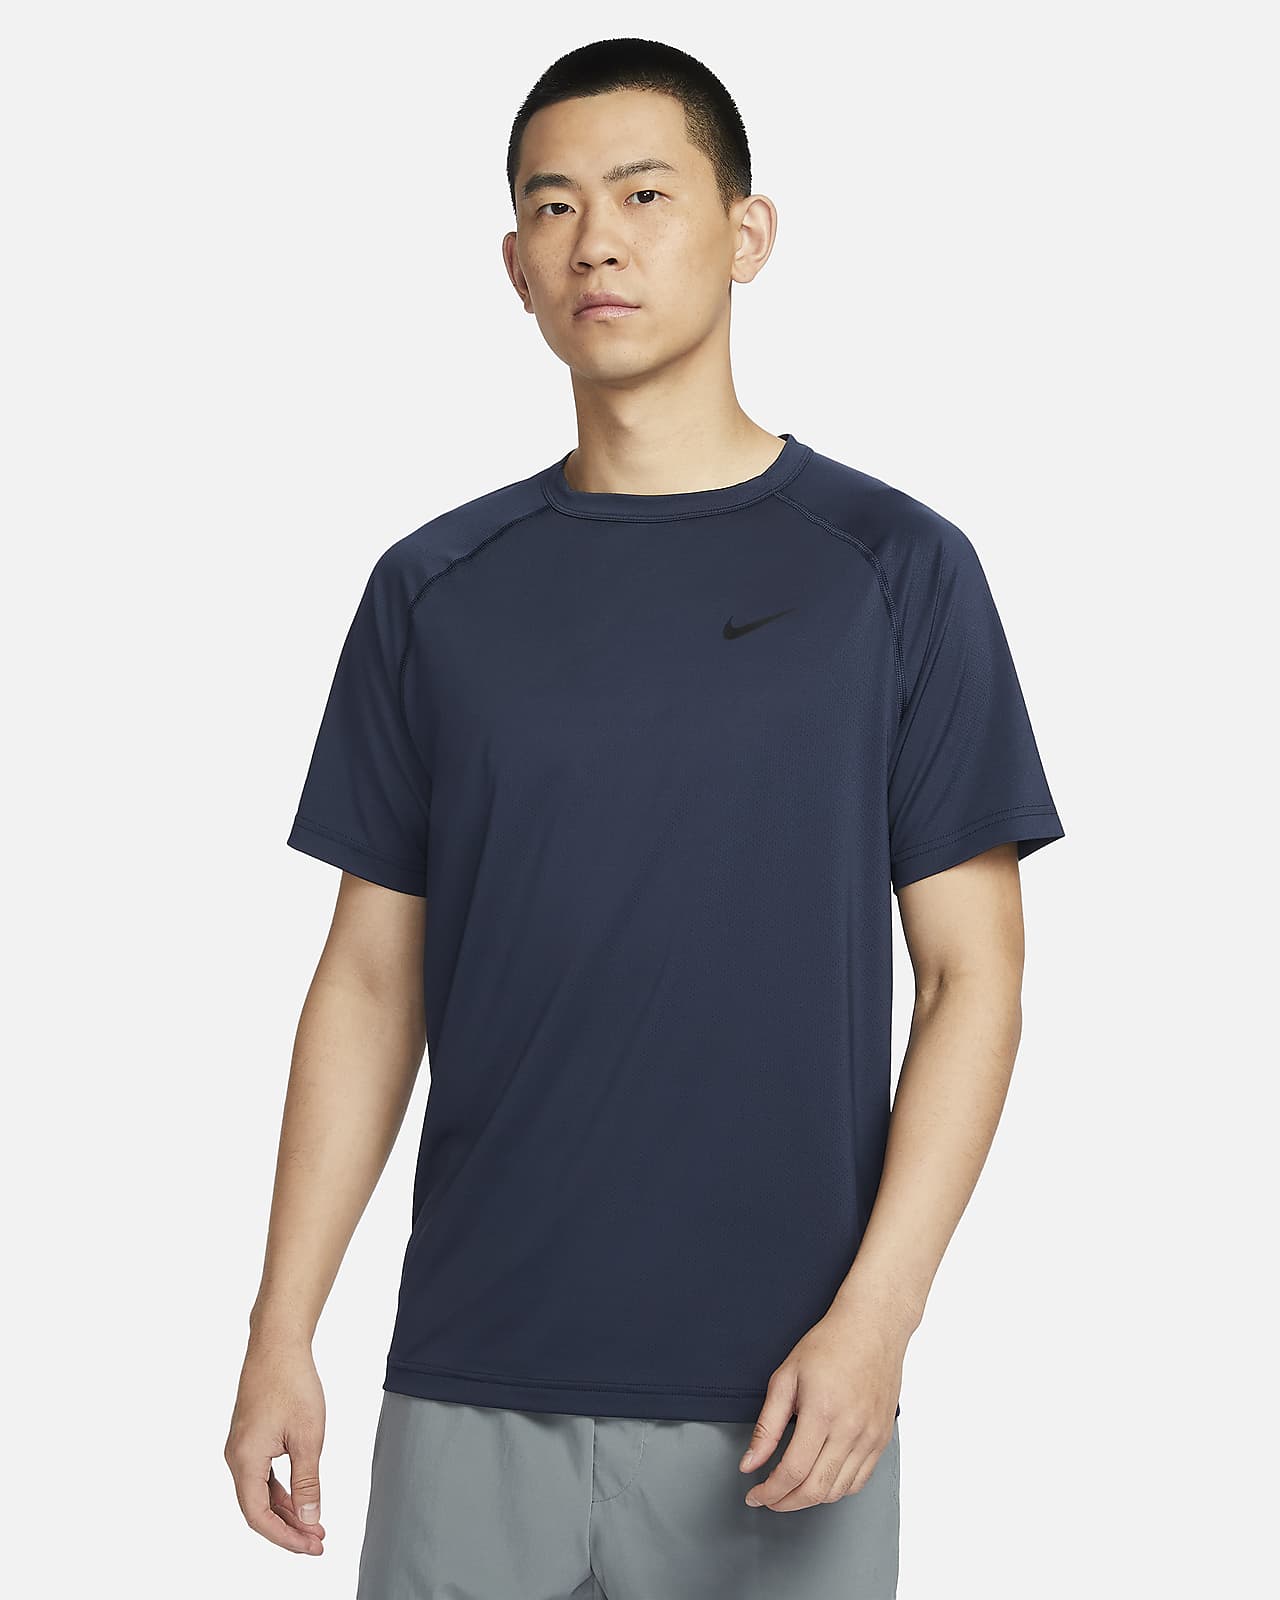 Nike Dri-FIT Ready Men's Short-Sleeve Fitness Top. Nike IN